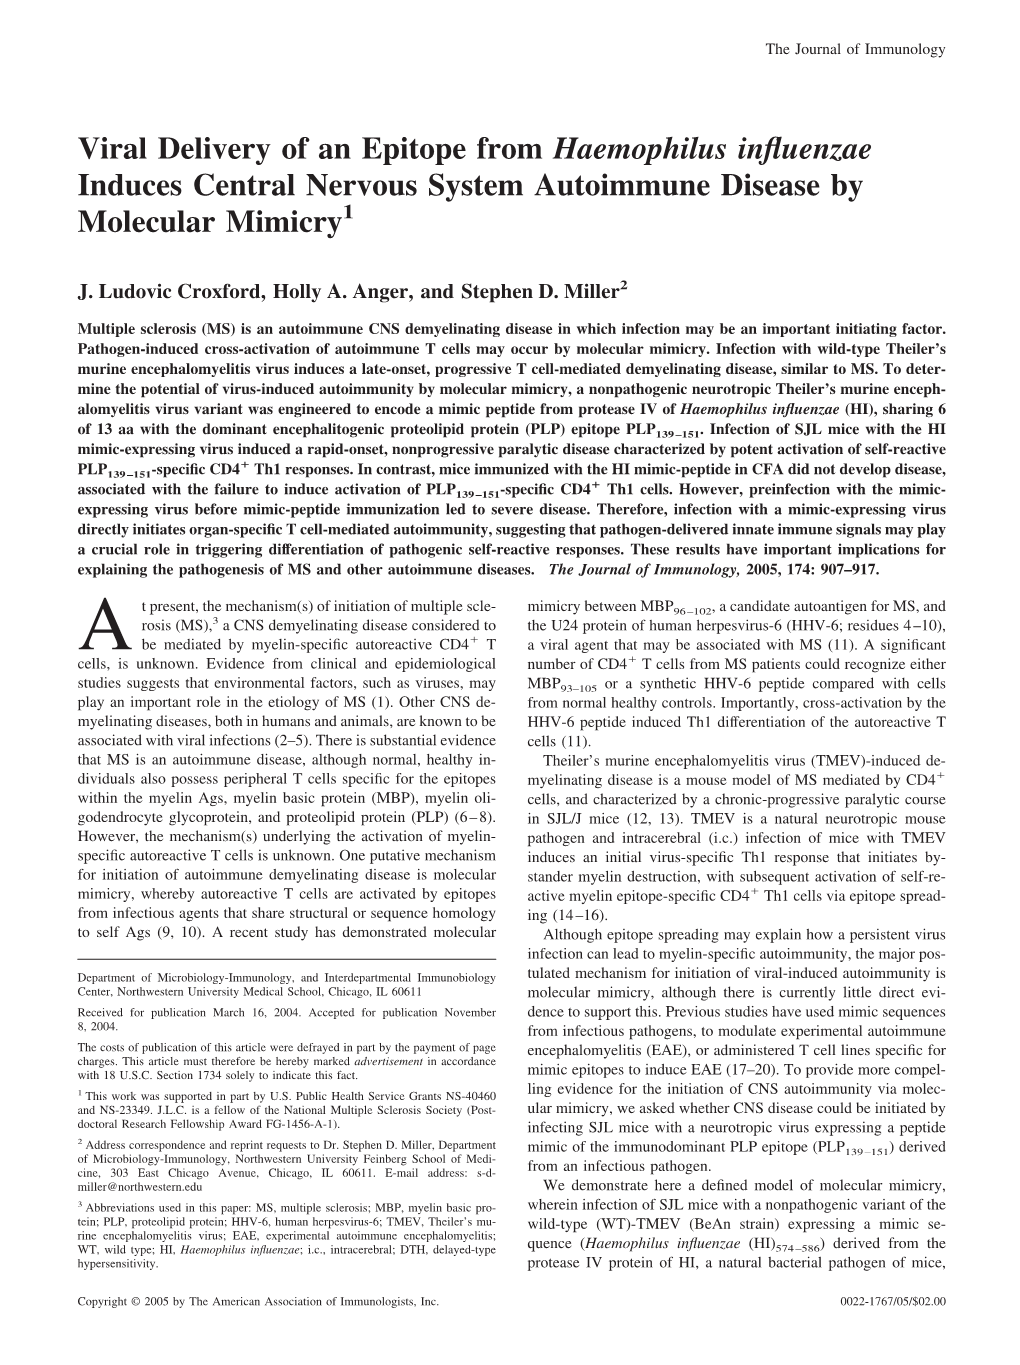 Molecular Mimicry Nervous System Autoimmune Disease by Induces